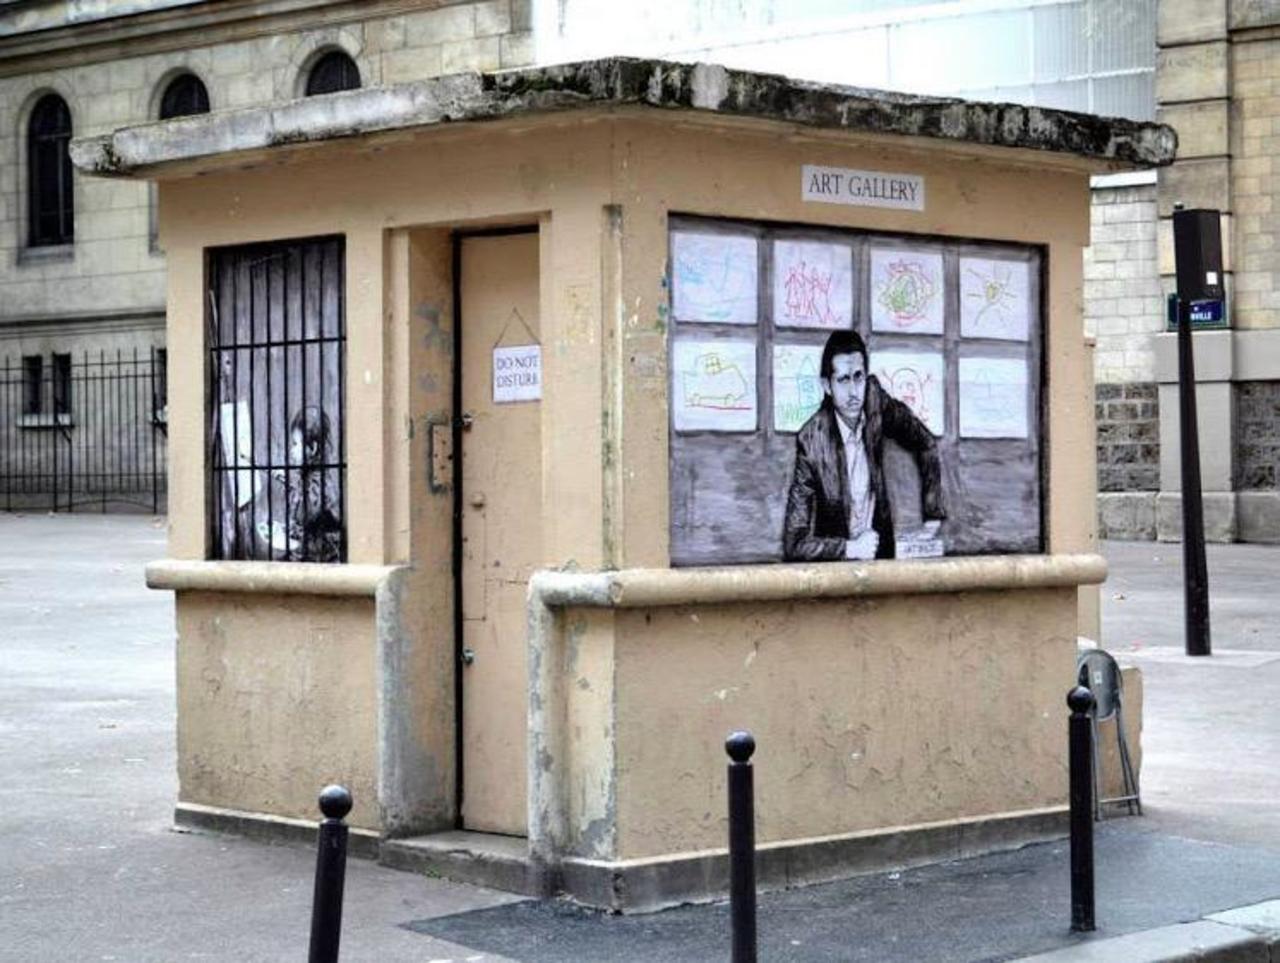 AuKeats: RT richardbanfa: #streetart by #Levalet in #Paris #switch #graffiti #bedifferent #art #art http://t.co/oBVTT1VYnK